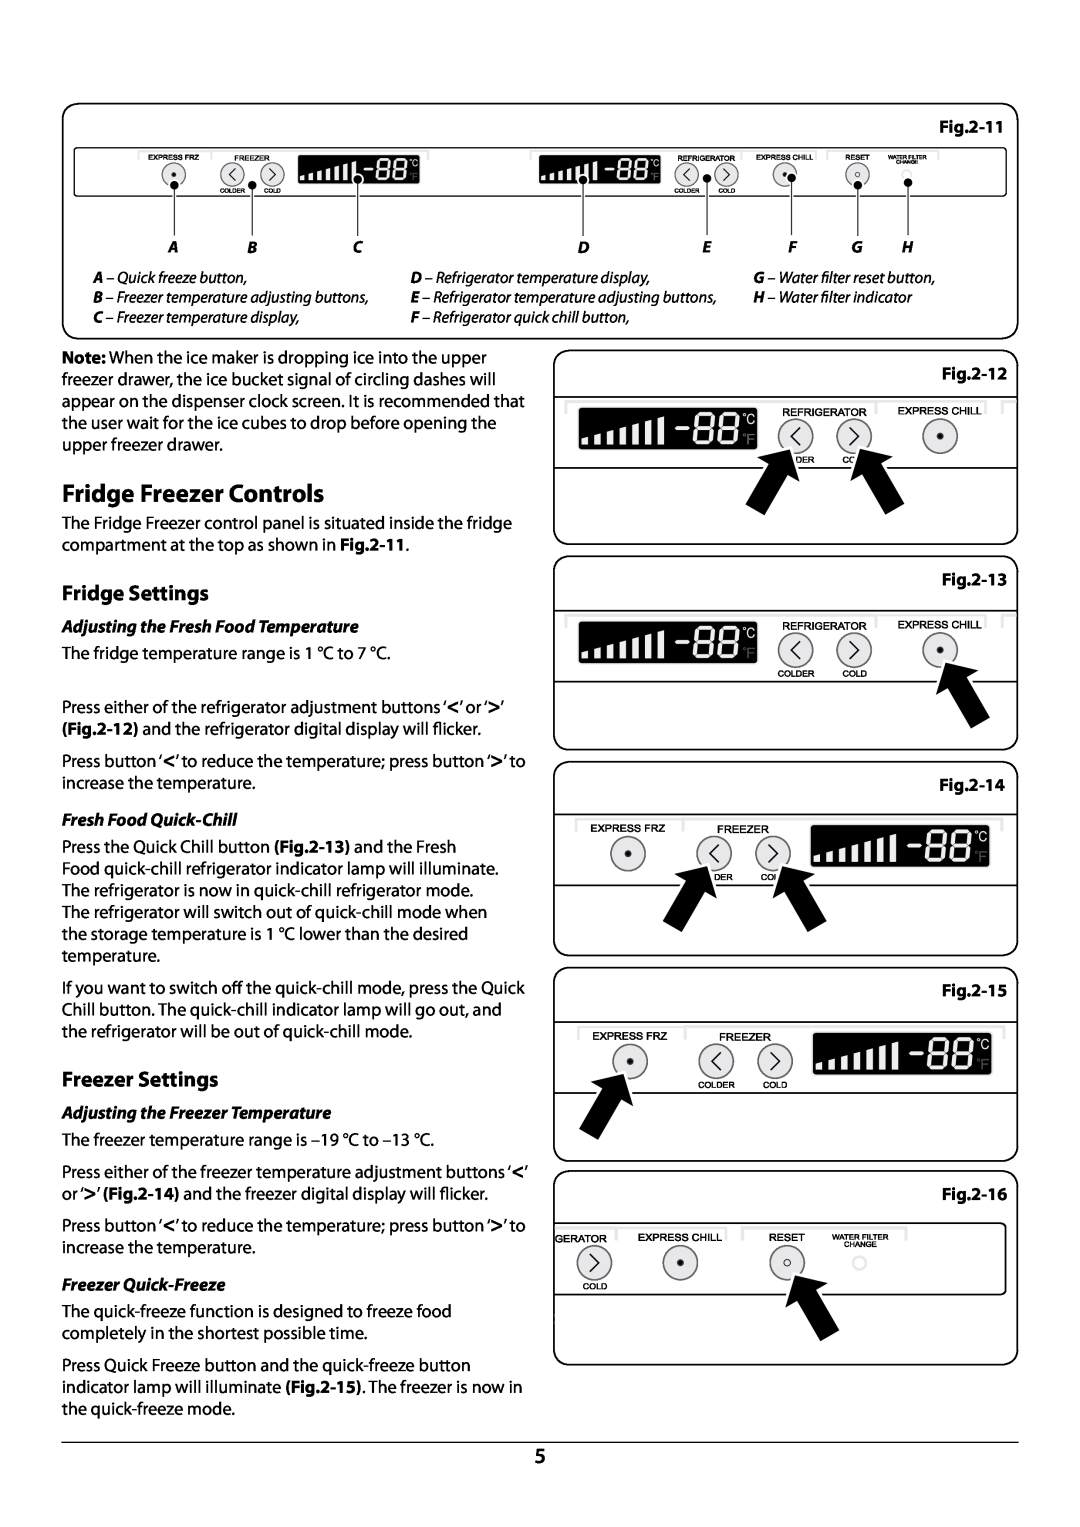 Rangemaster U109923 - 05 Fridge Freezer Controls, Fridge Settings, Freezer Settings, ArtNo.600-0036- controls, 11, 12, 13 